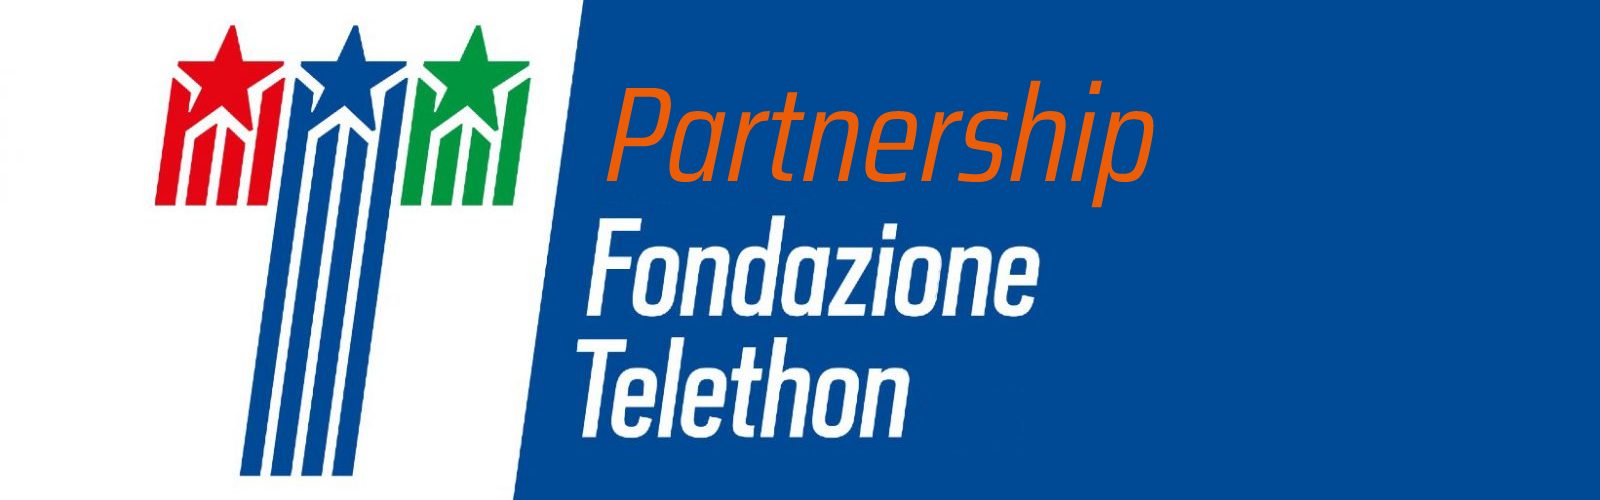 Fondazione Telethon partnership